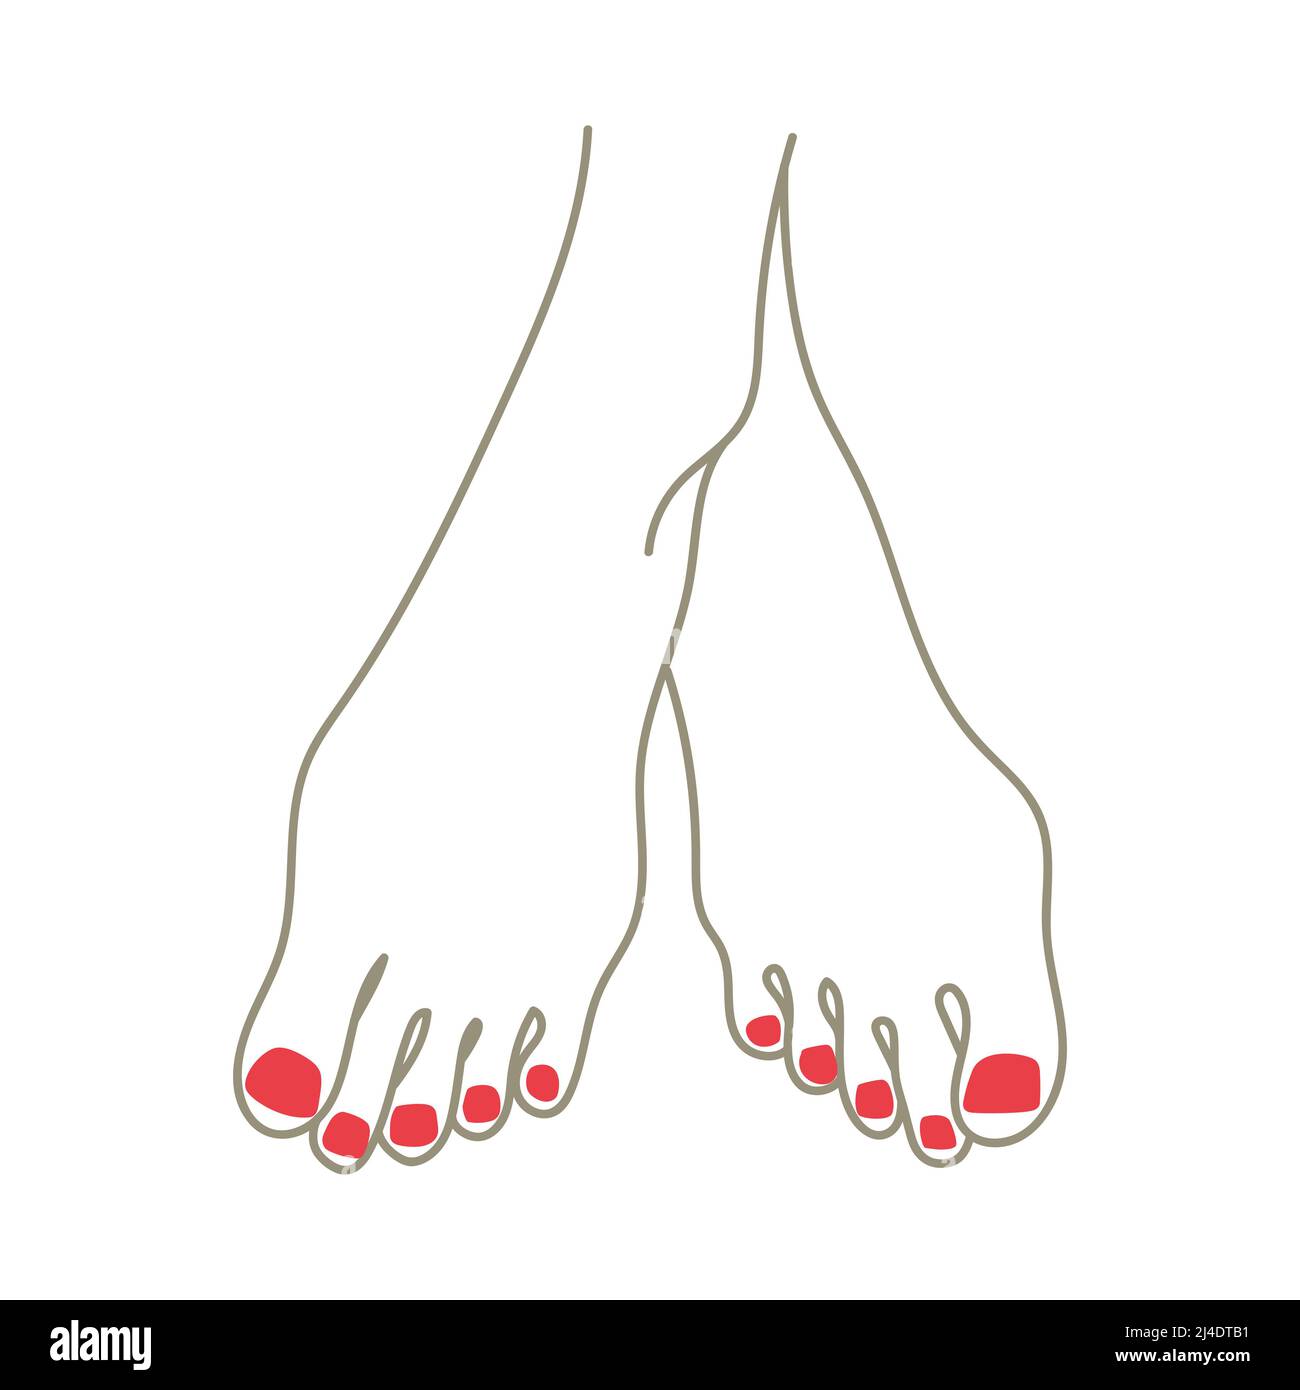 Woman feet care illustration pedicure massage Stock Photo - Alamy